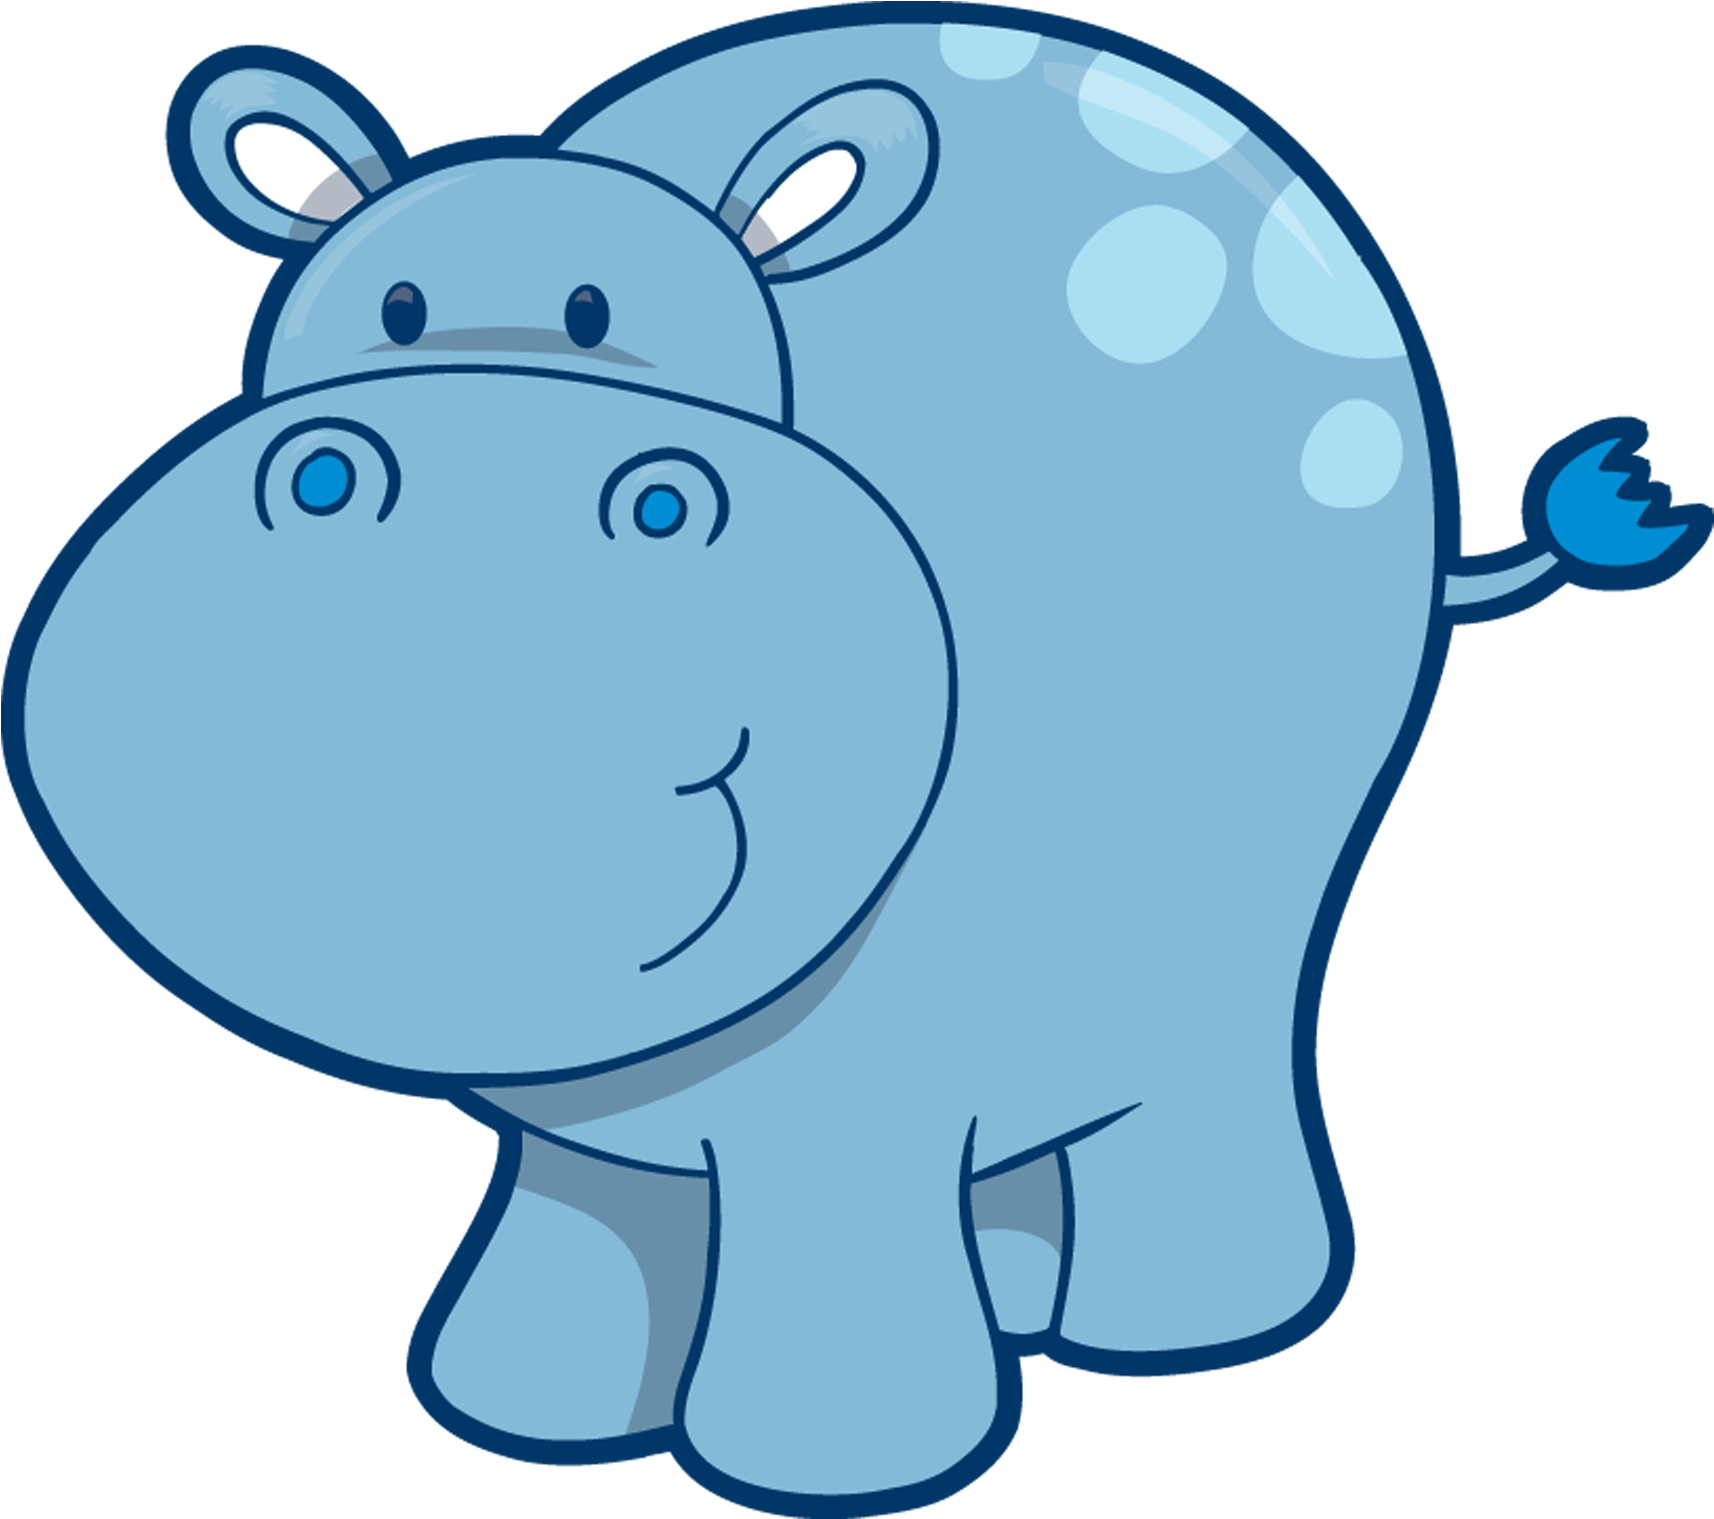 Hippopotamus Cuteness Drawing Clip Art Hippo 2288 1832 - Hippopotamus Cuteness Drawing Clip Art Hippo 2288 1832 (2288x1832)